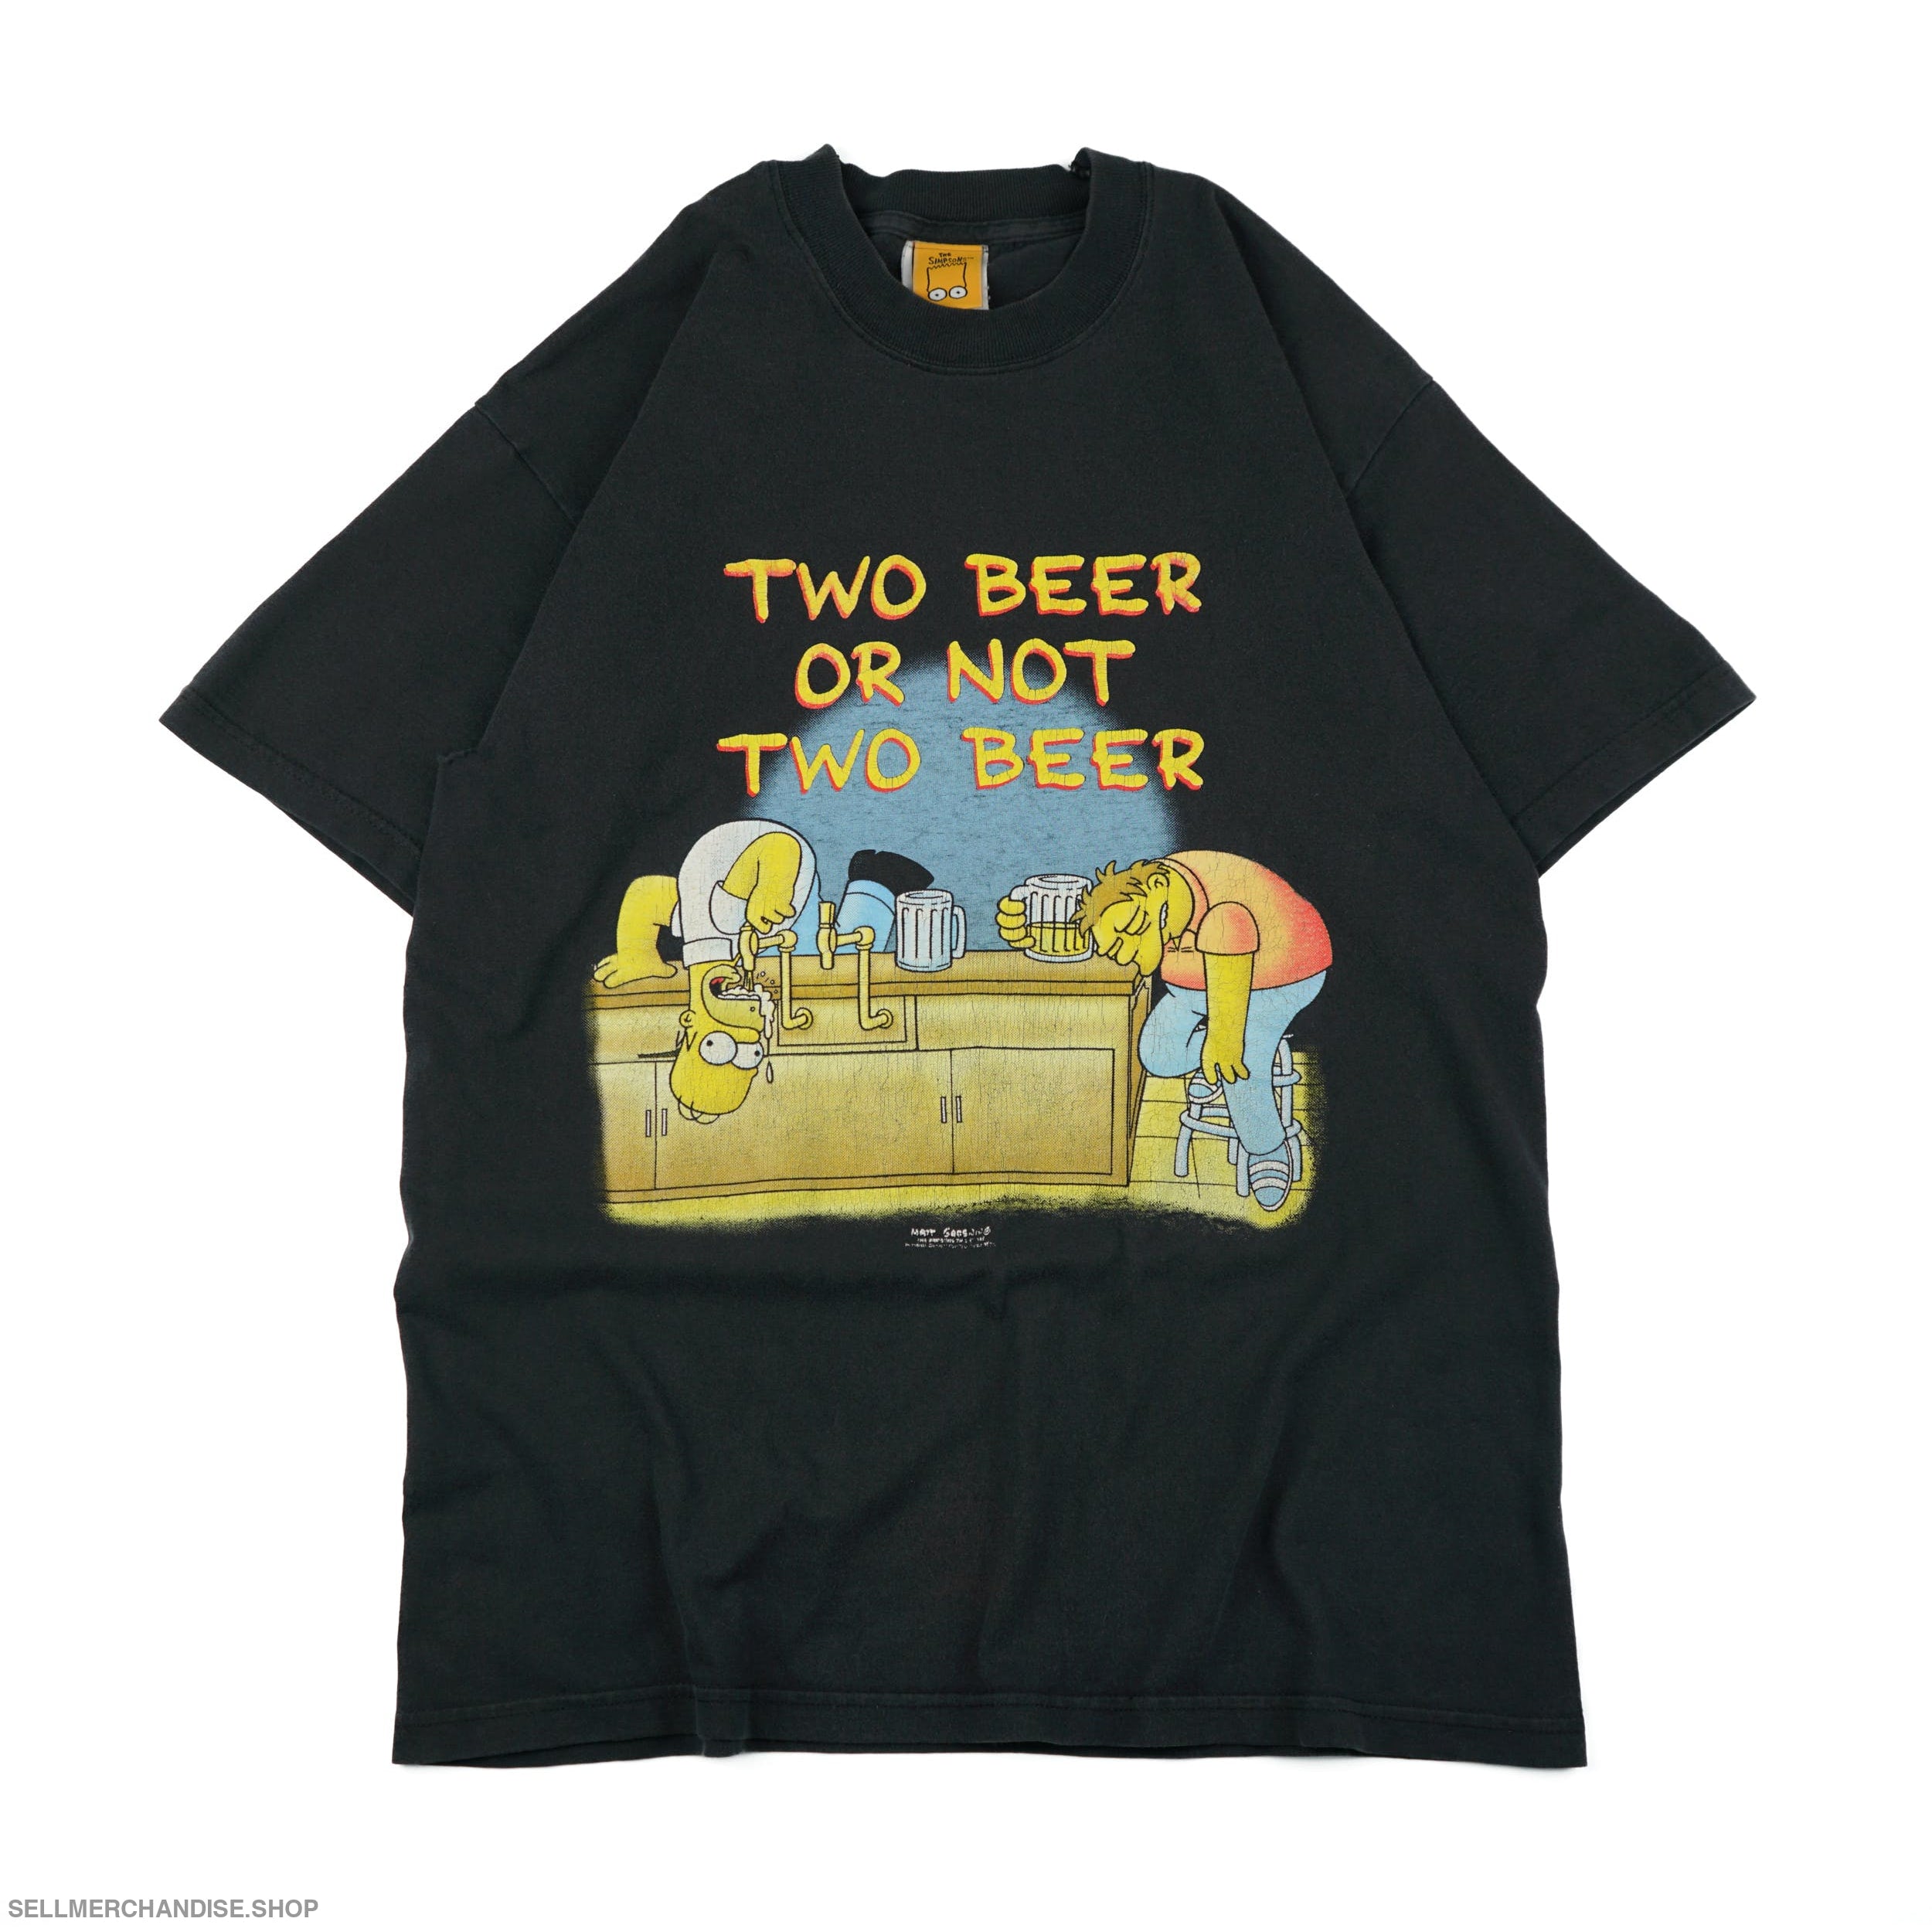 Vintage The Simpsons T-Shirts Collection | SellMerchandise.Shop